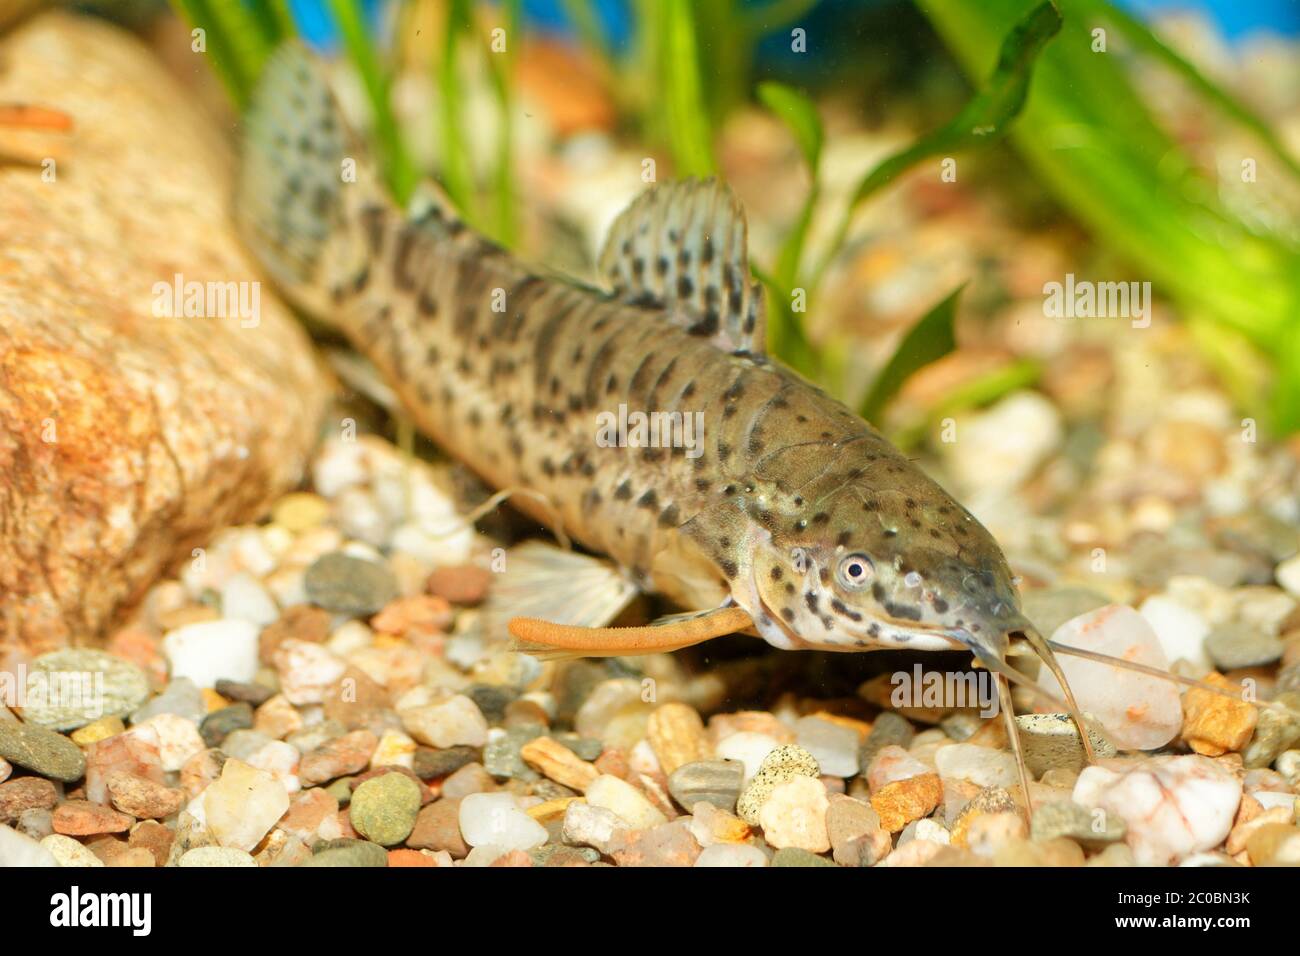 Hoplosternum fish Stock Photo